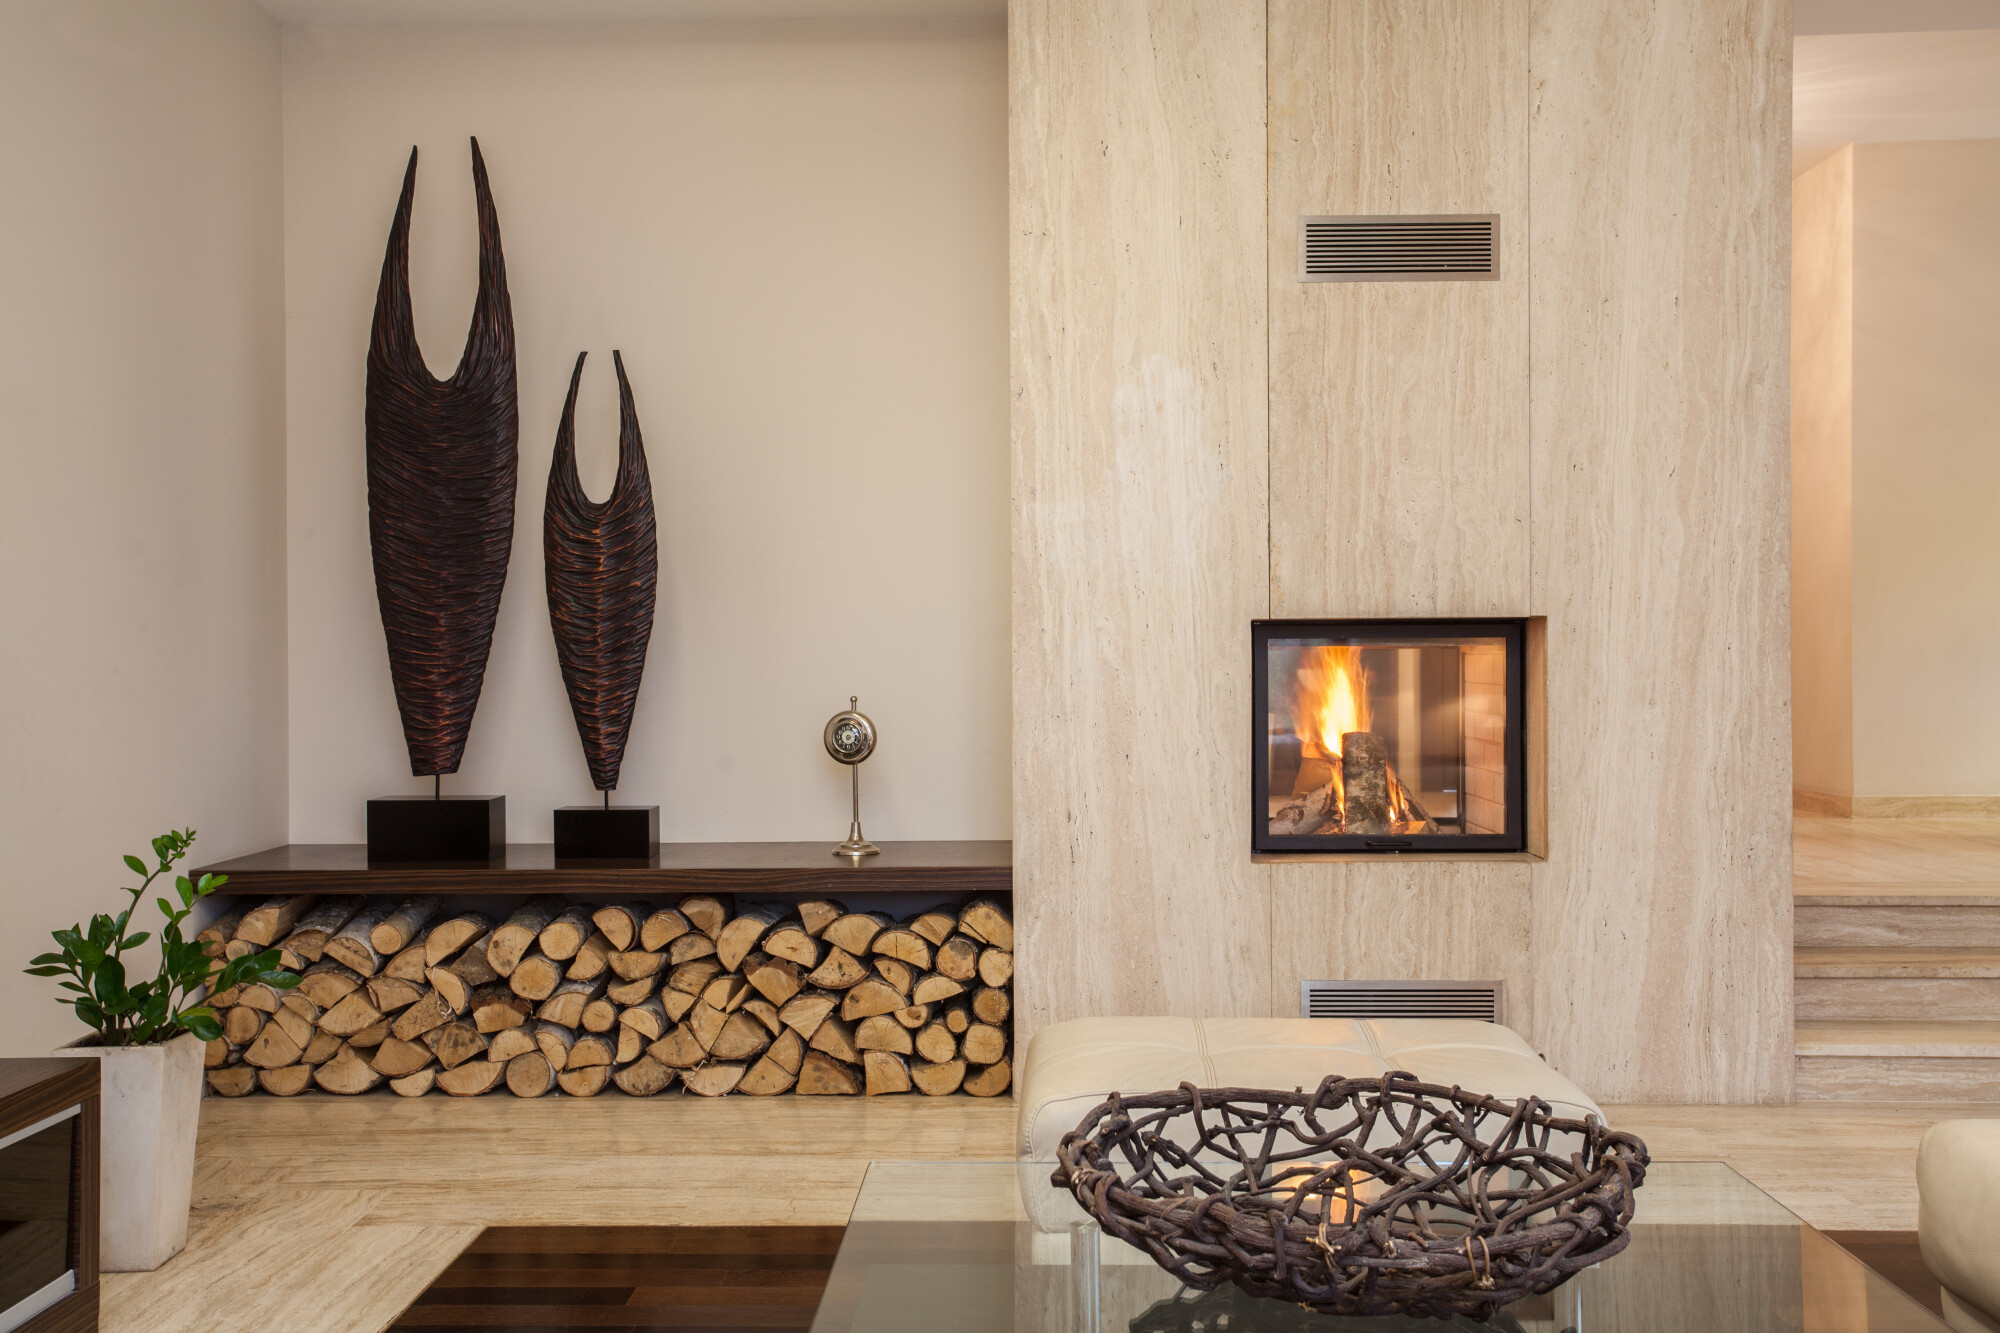 wood fireplace